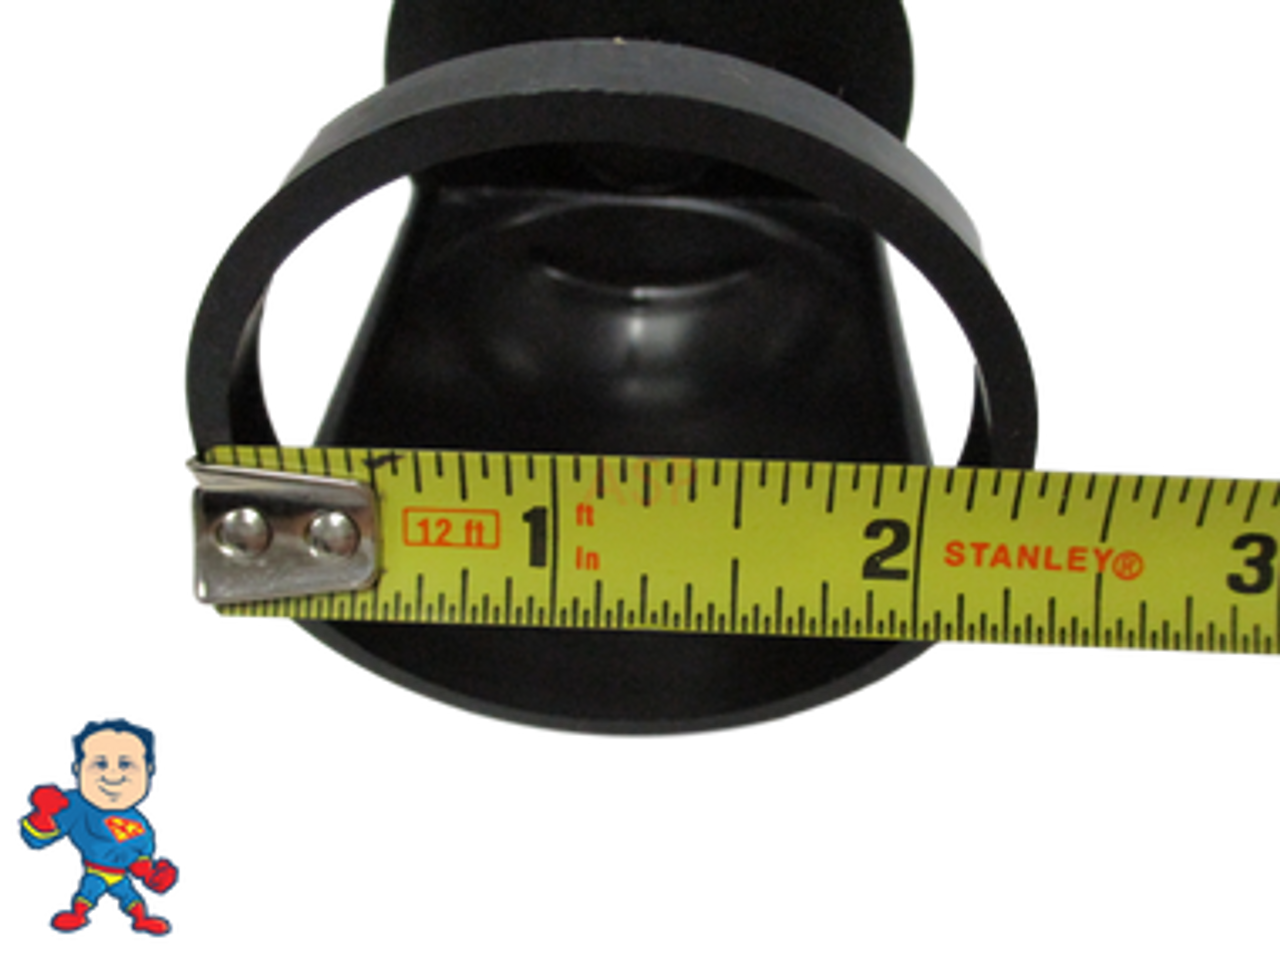 Diverter Valve Spa Gray Hot Tub O-Ring Cap Stem Kit Reinforced Handle Video